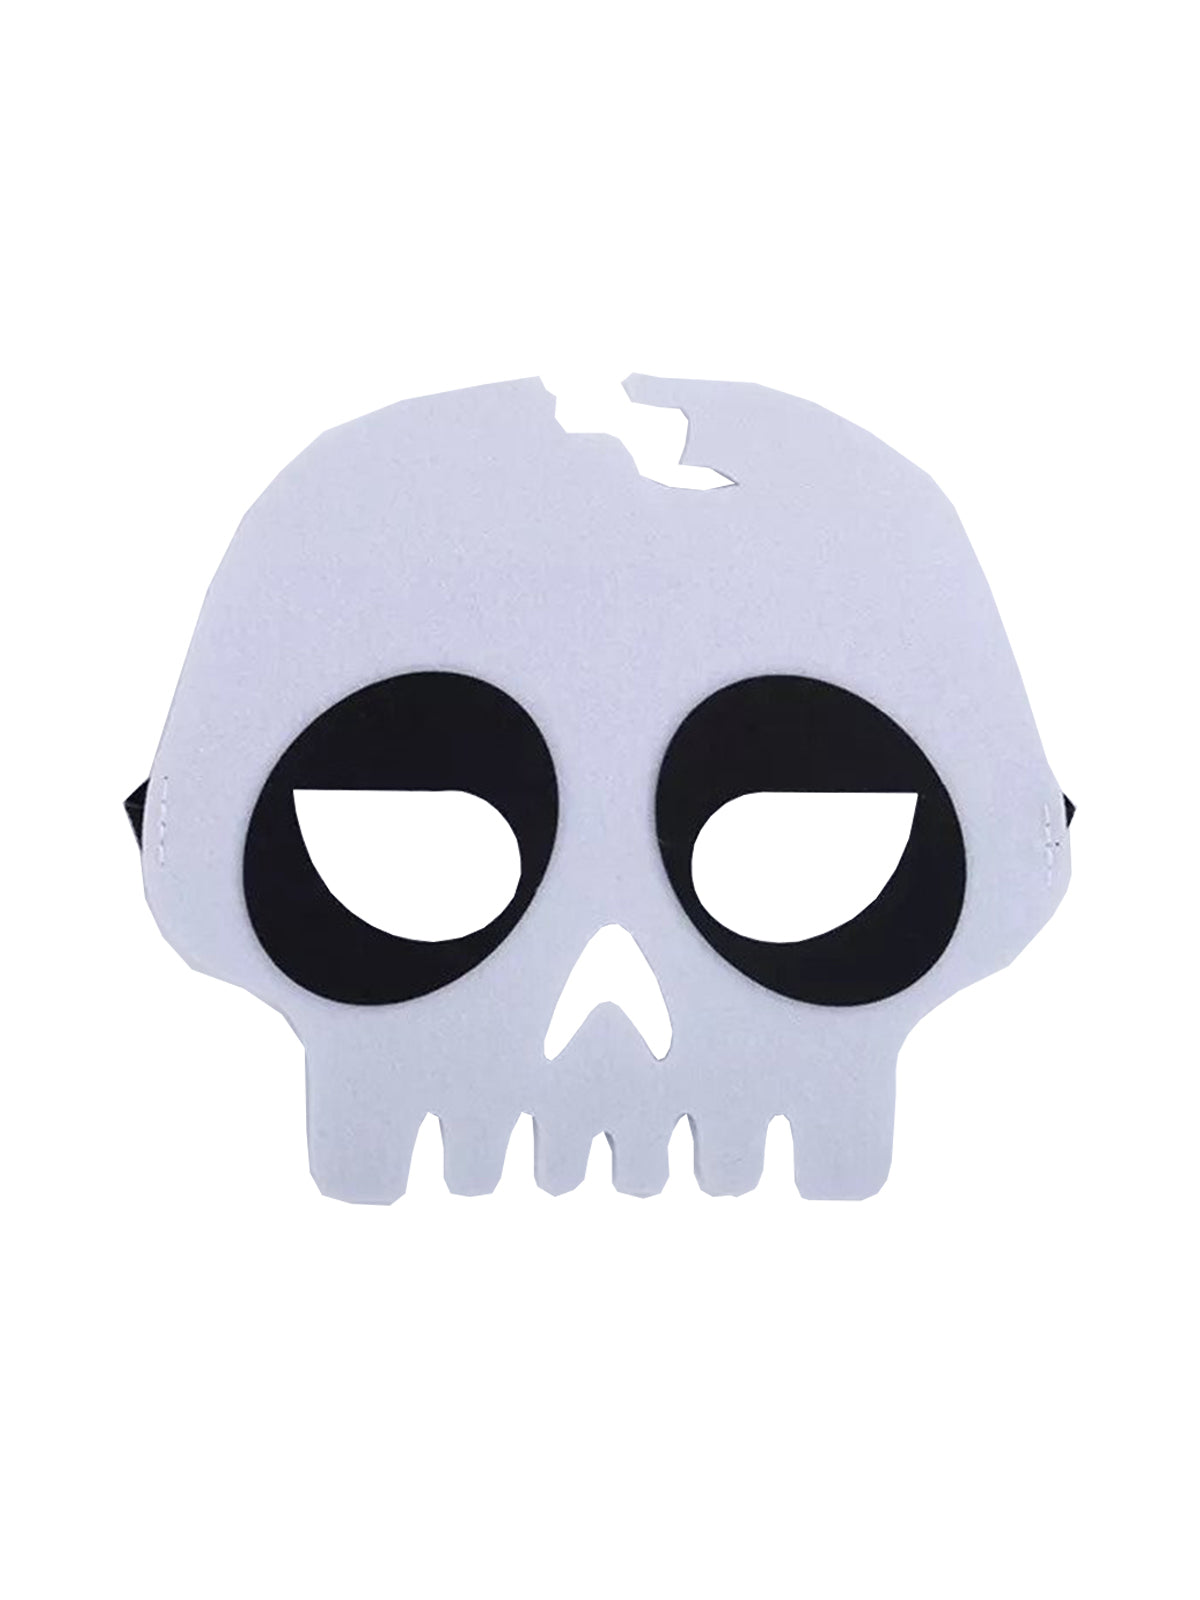 Corpse Skeletor Mask